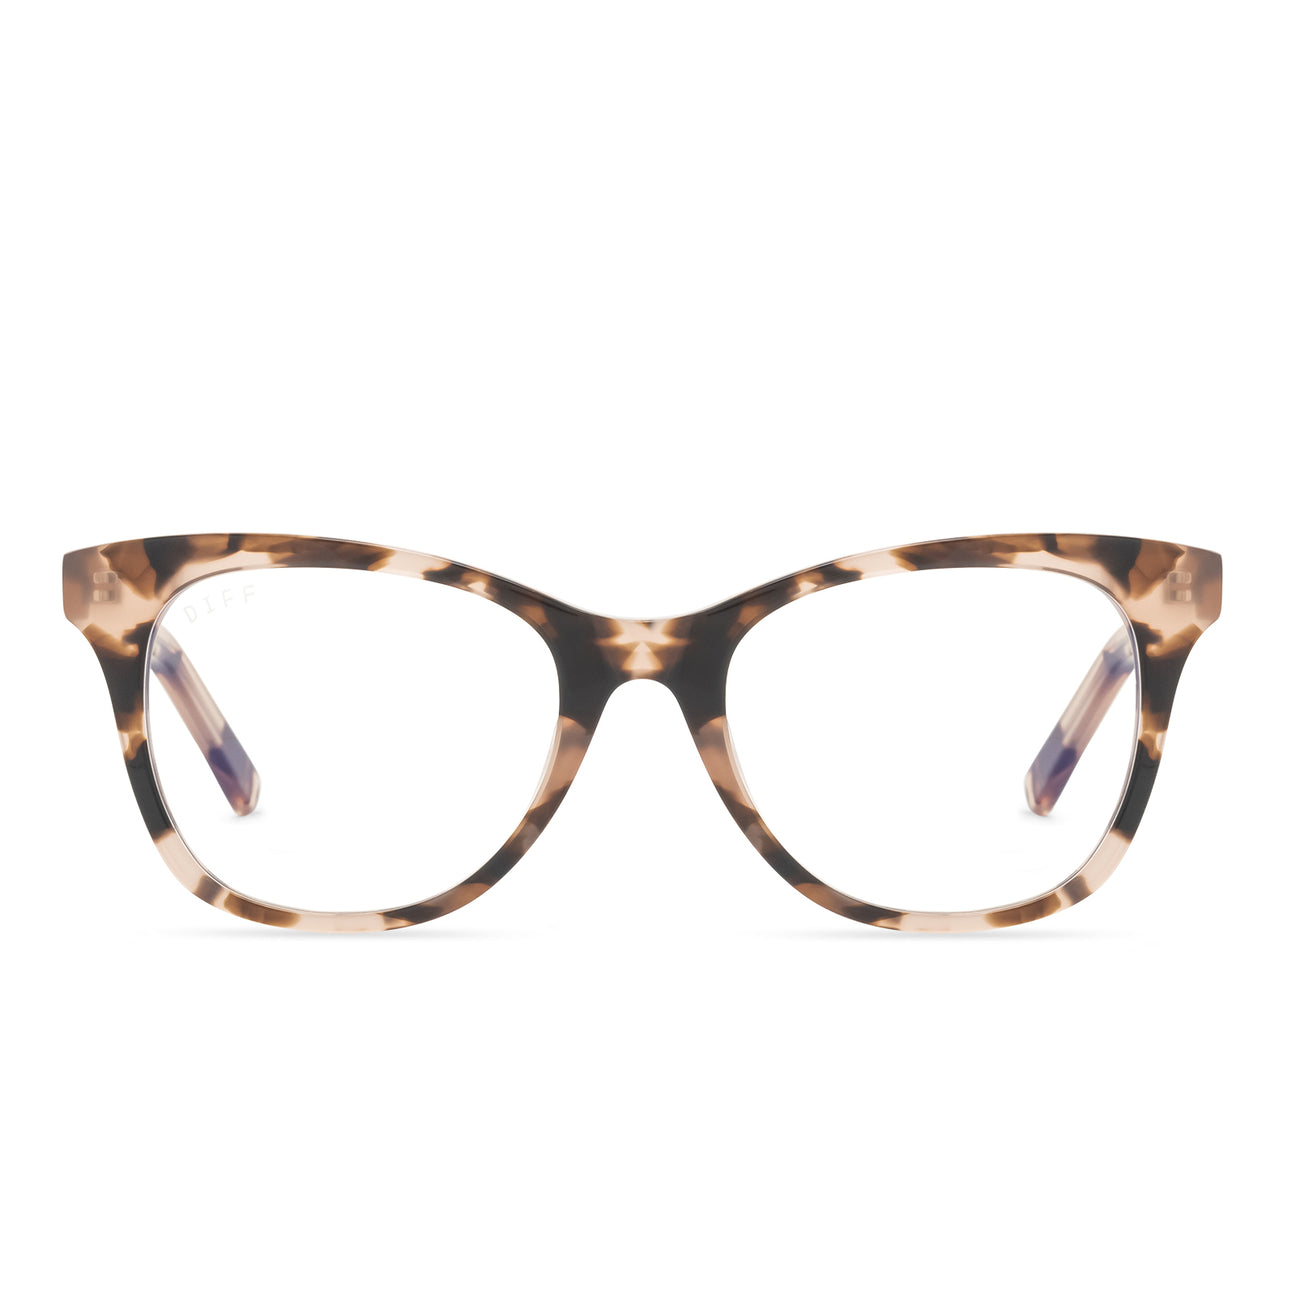 CARINA - HIMALAYAN TORTOISE + CLEAR GLASSES – DIFF Eyewear